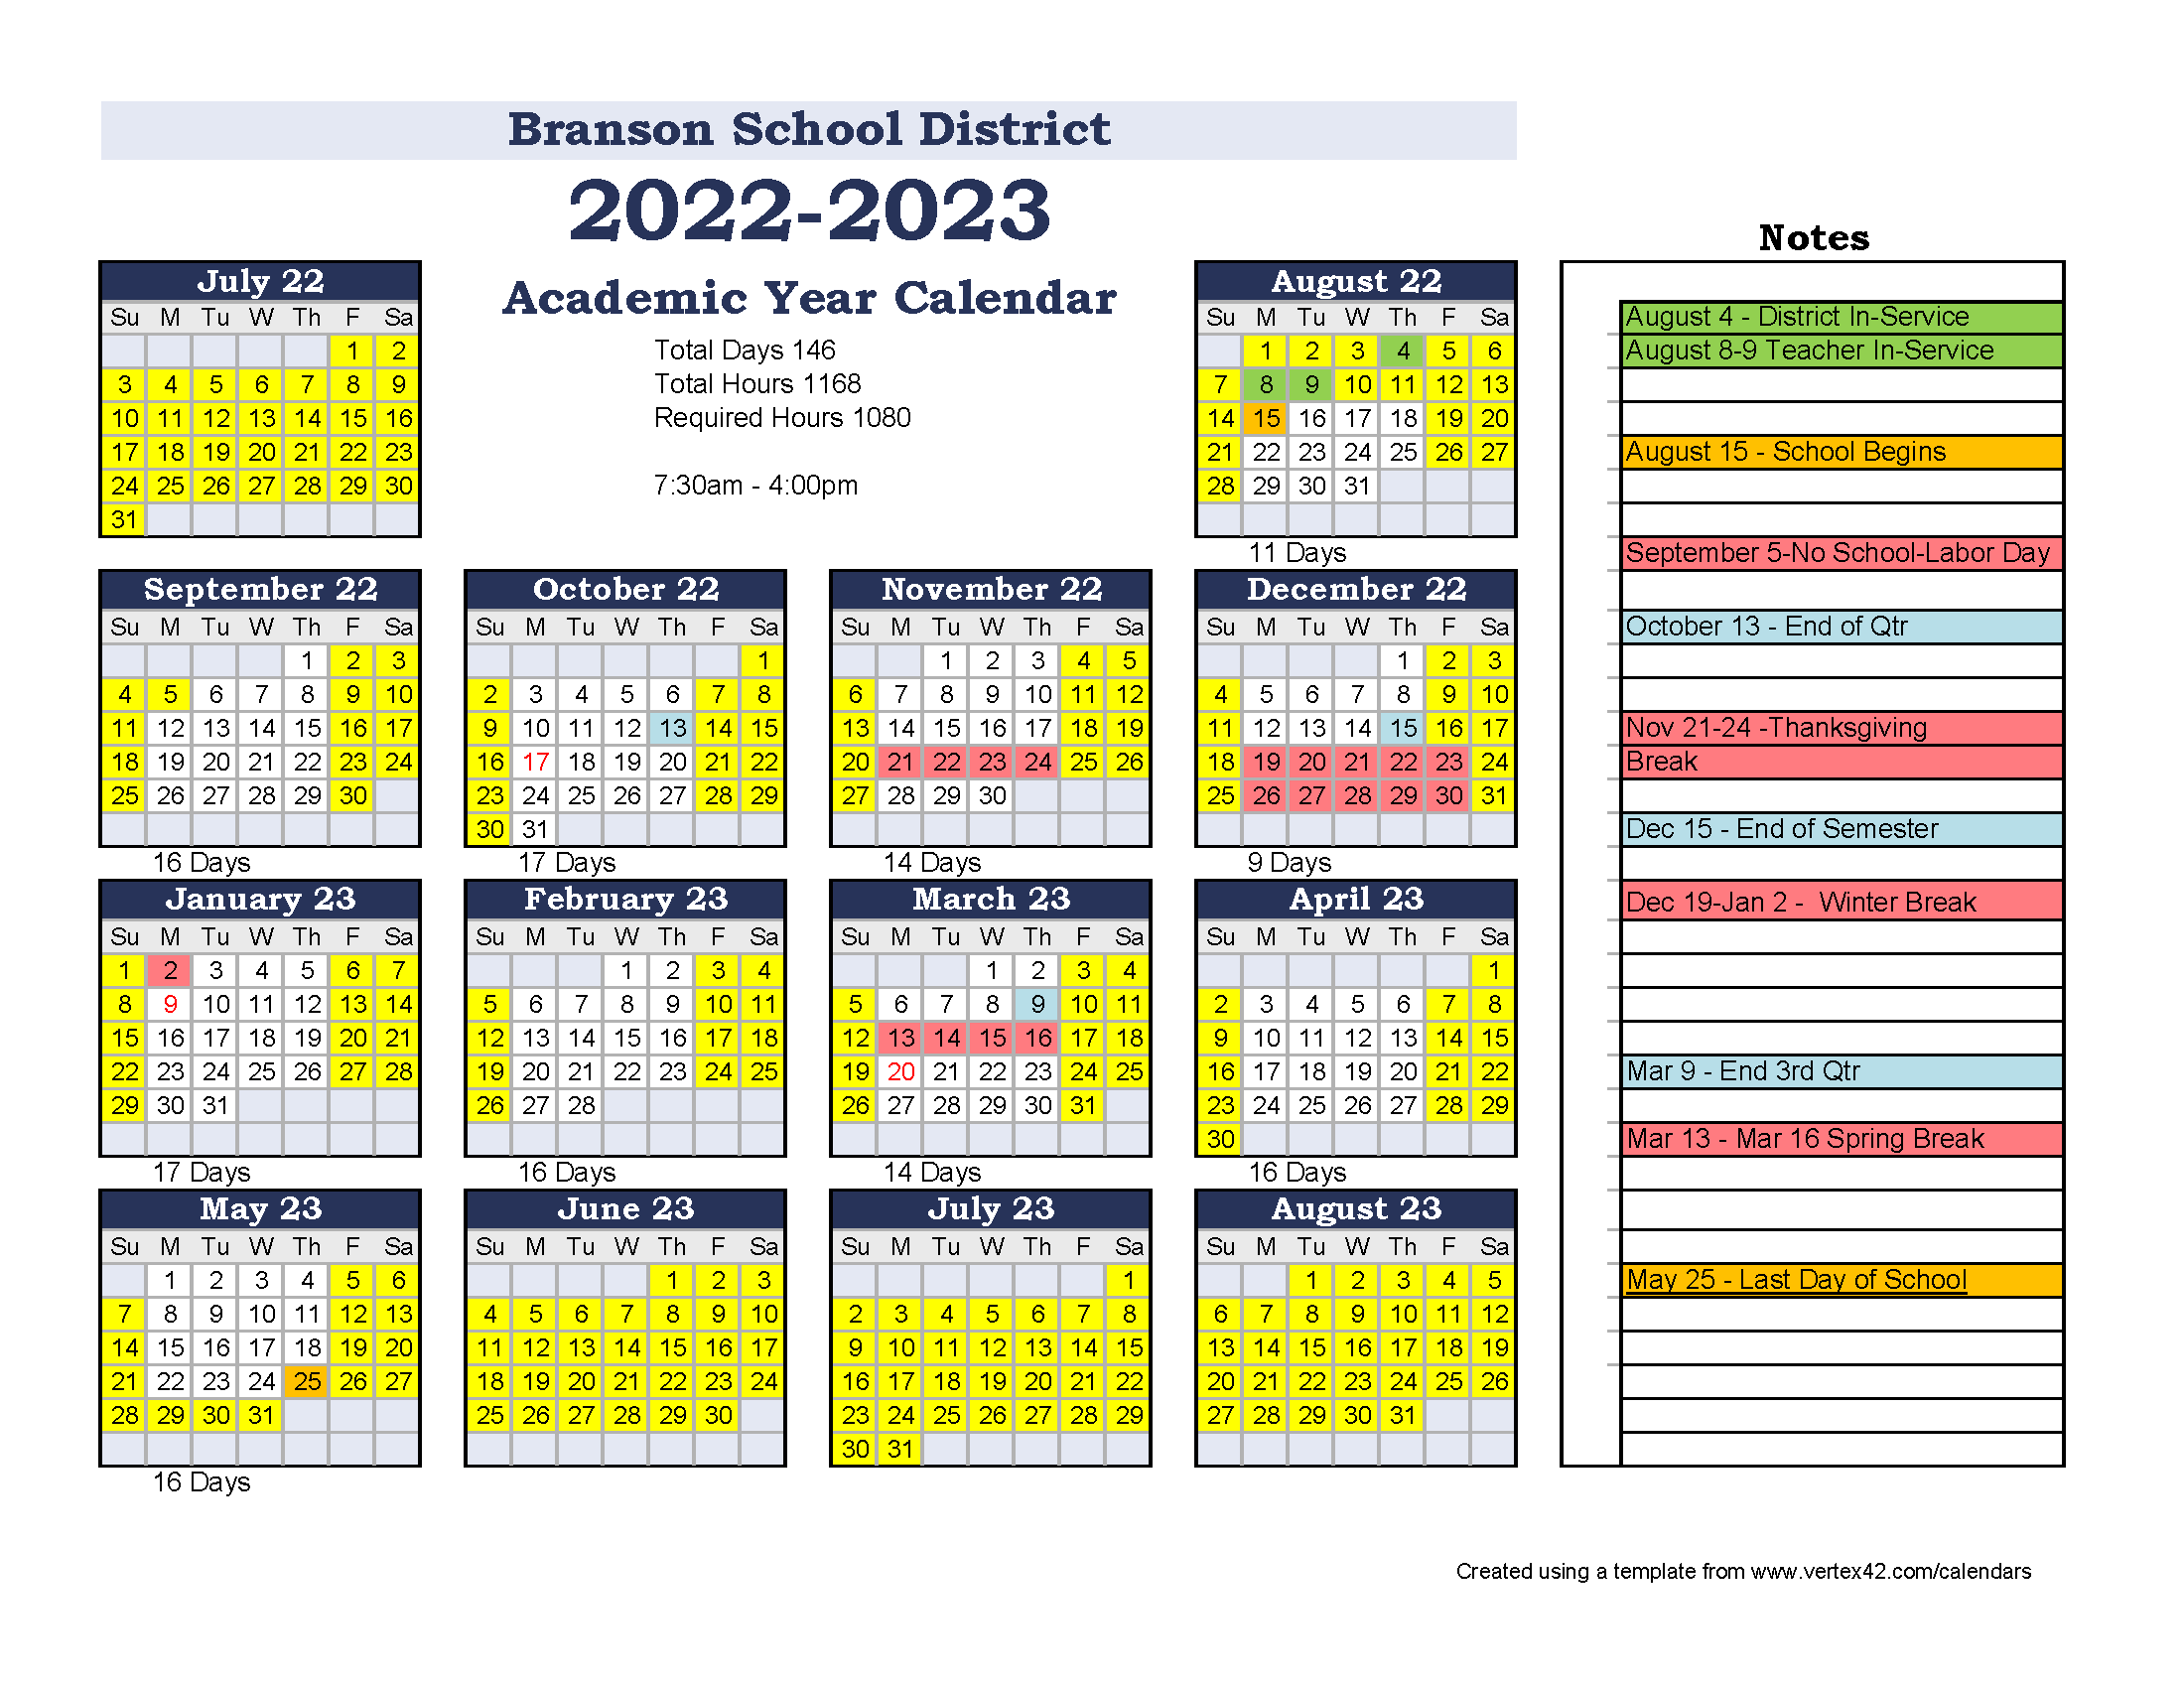 Branson School District Calendar 20242025